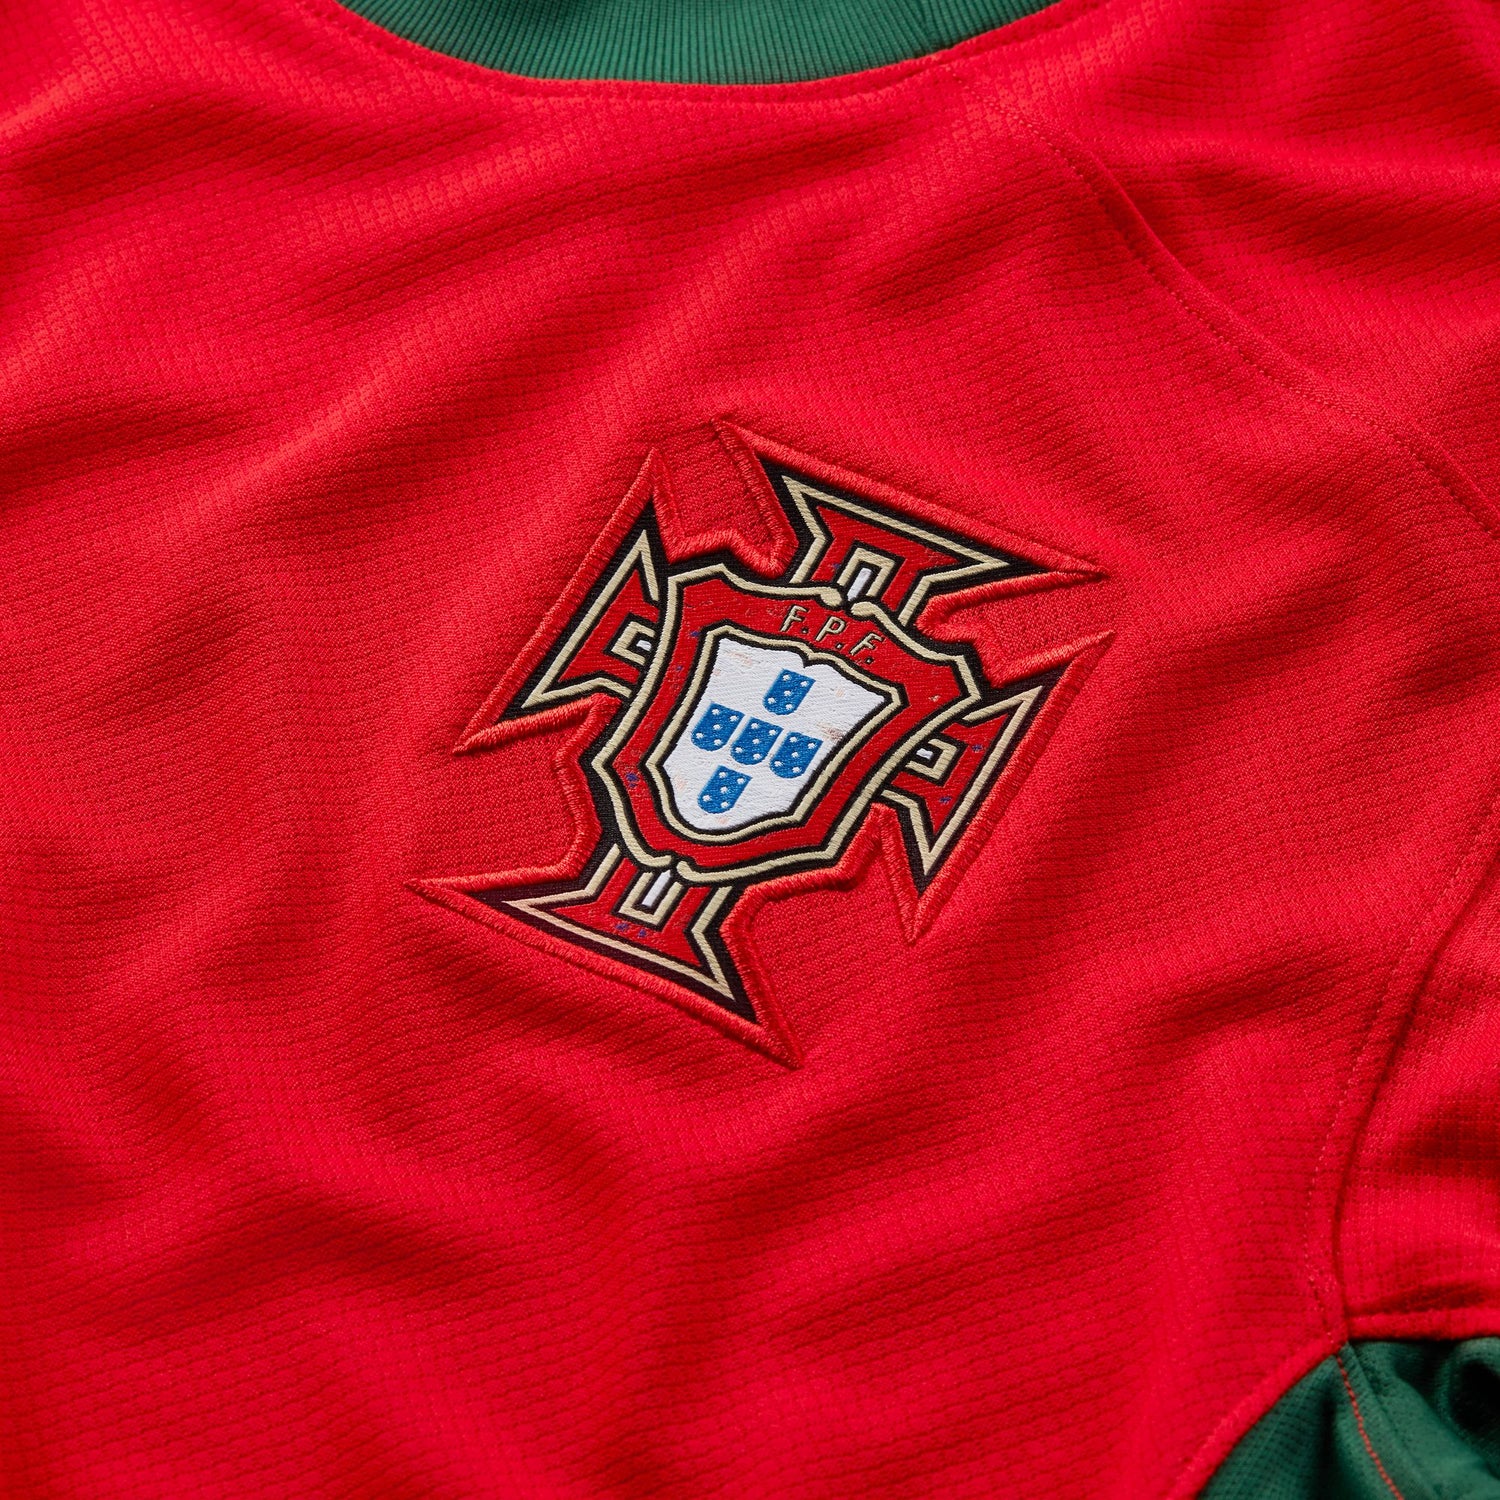 Men's Replica Nike Ronaldo Portugal Away Jersey 2022 DN0691-133